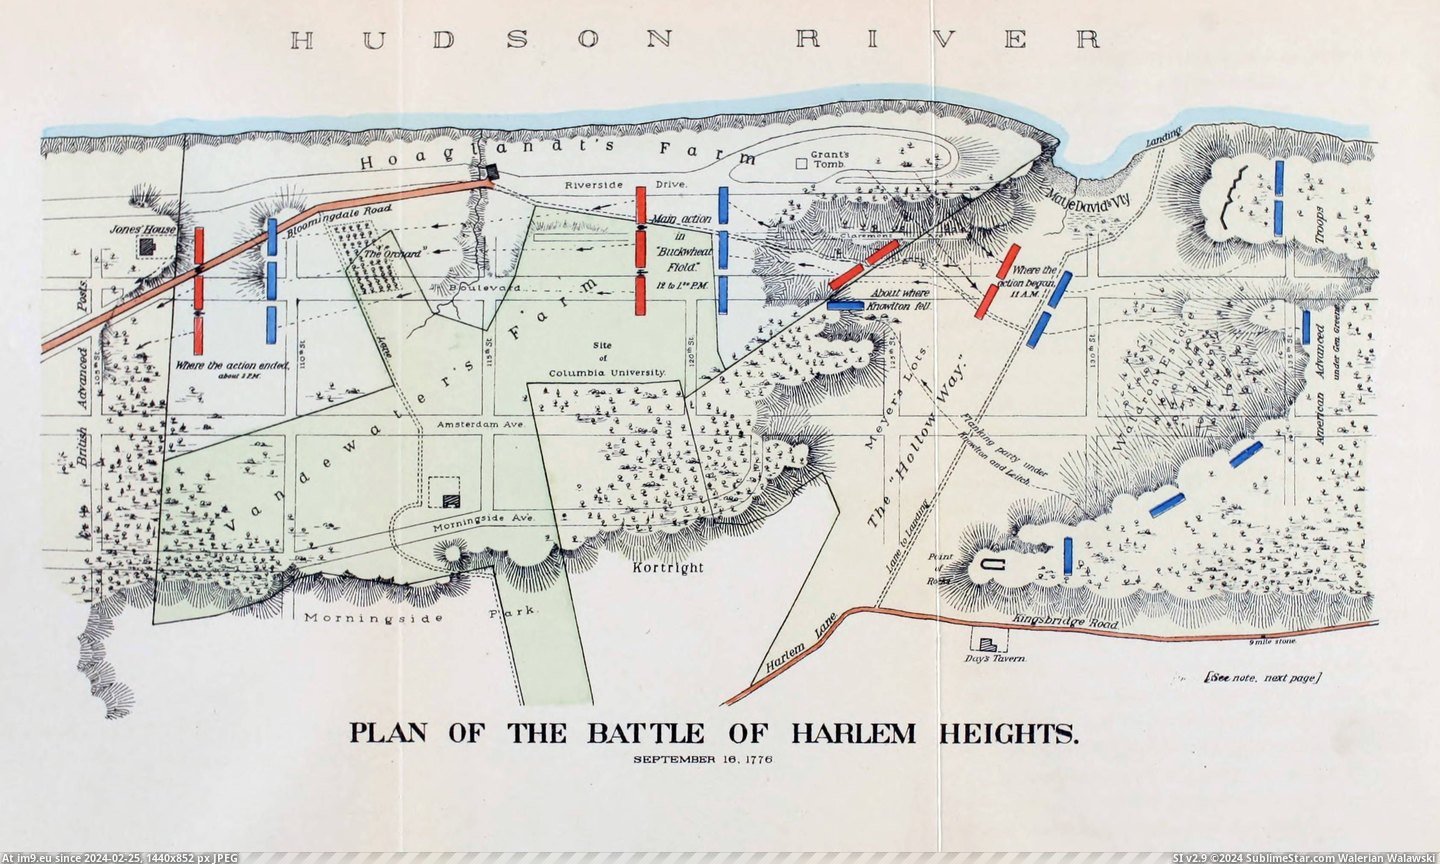 #Battle #Heights #Henry #Johnston #Harlem #Plan #September [Mapporn] Plan of the Battle of Harlem Heights, September 16, 1776 (By Henry P. Johnston in 1897) [3369x2006] Pic. (Image of album My r/MAPS favs))